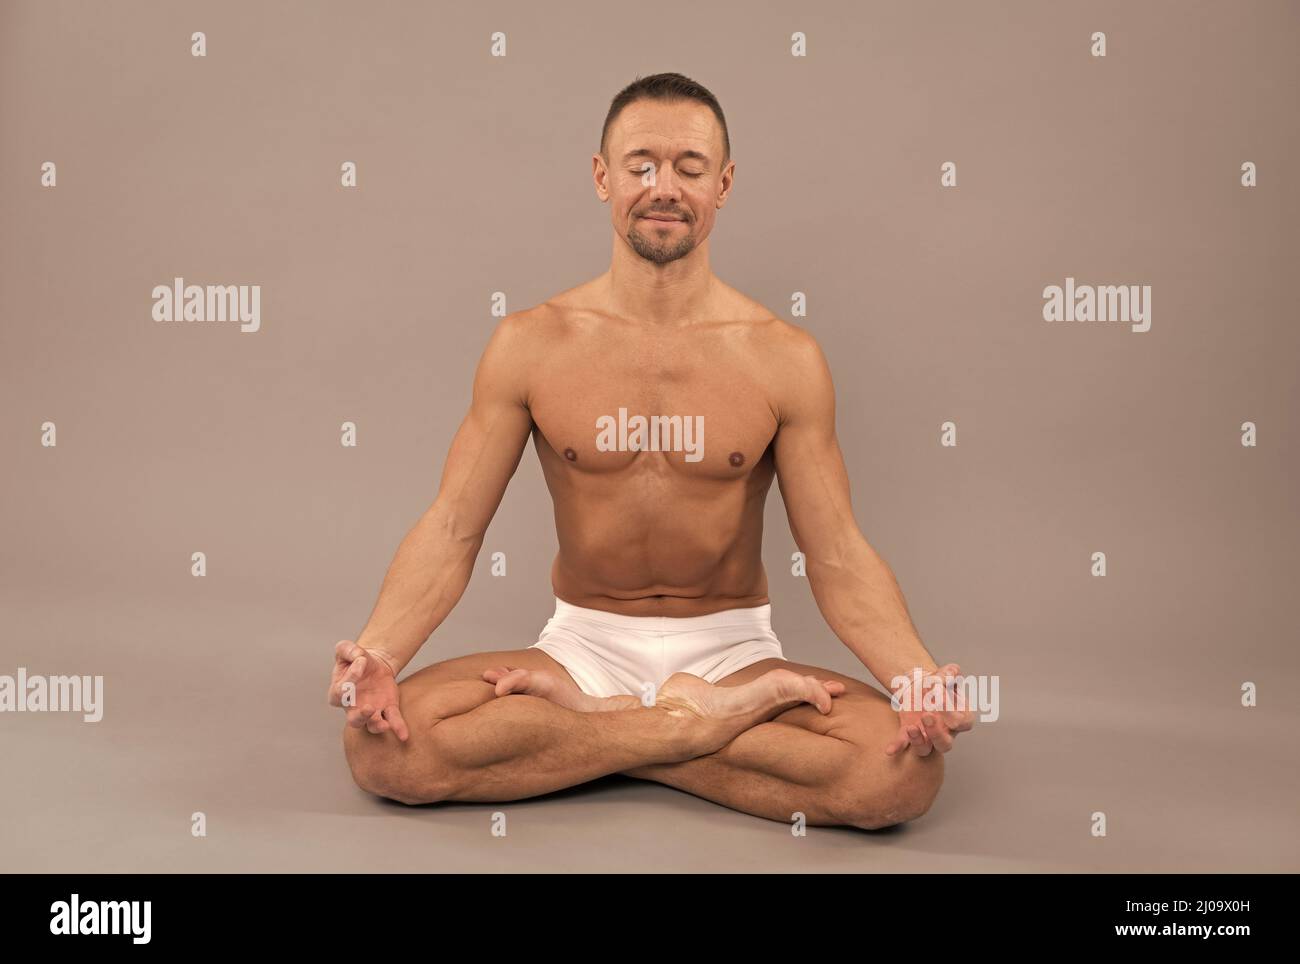 Men's Minimalist Lotus Pose Yoga Tank Top